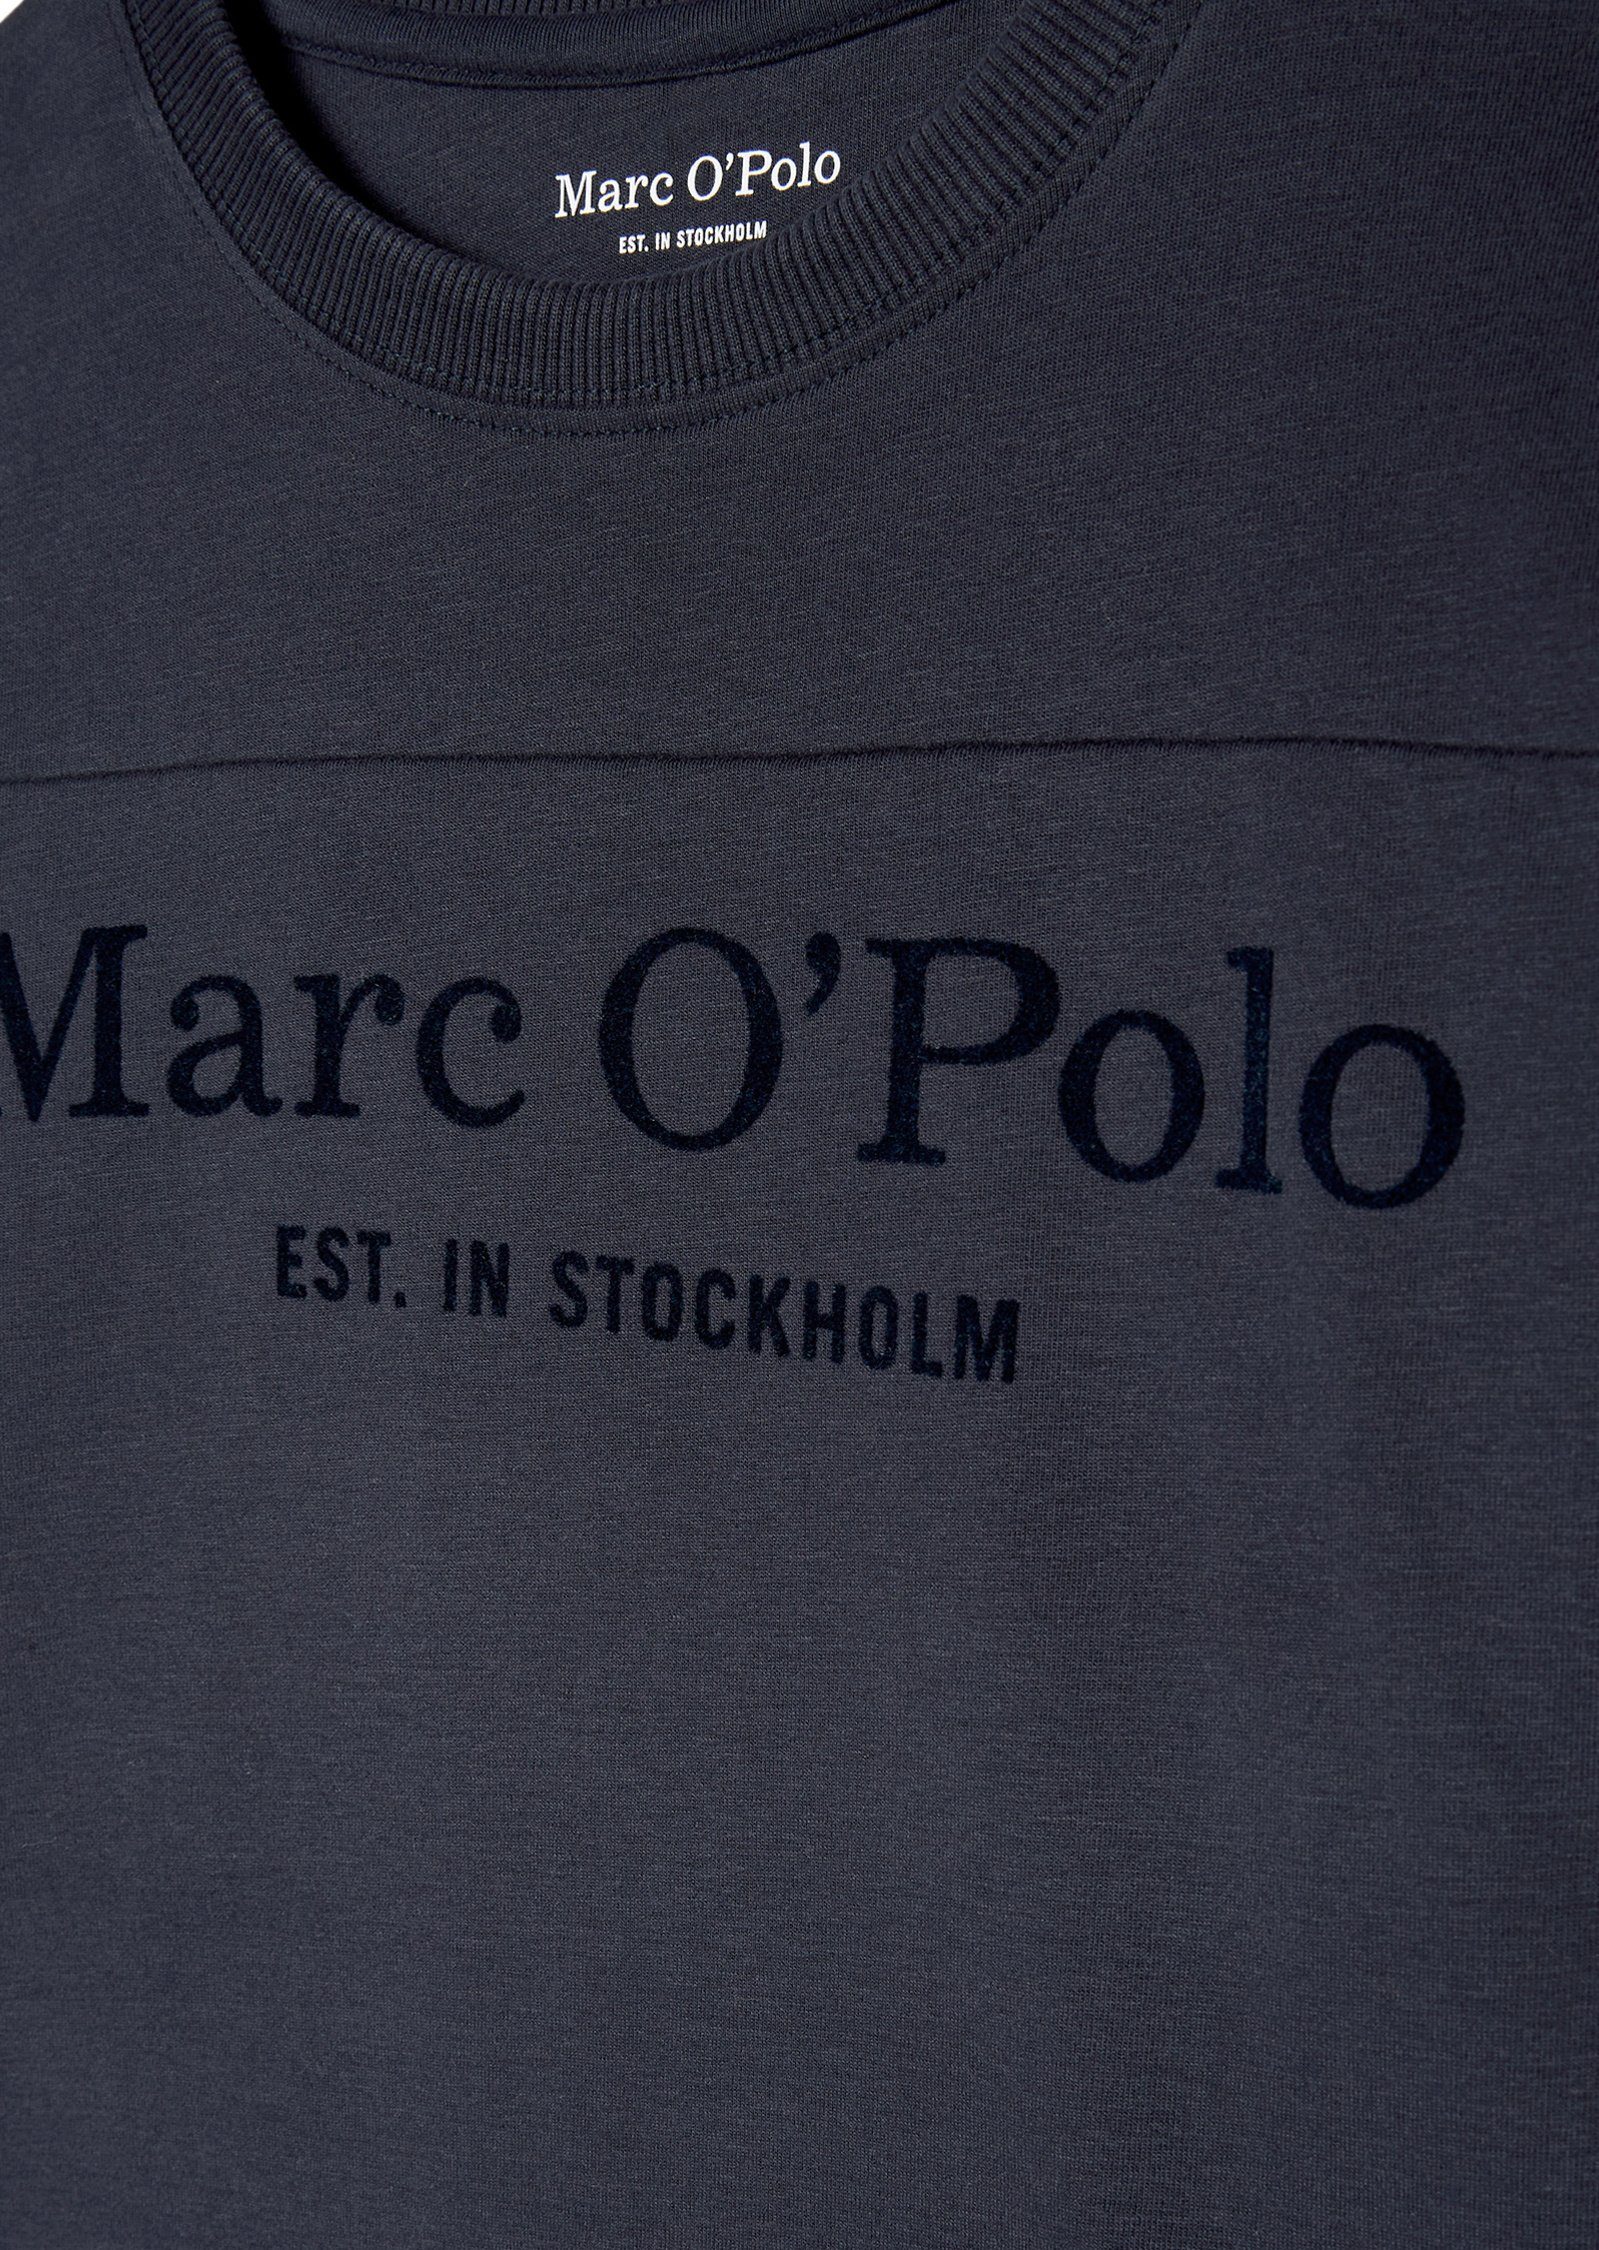 Marc O'Polo Langarmshirt Bio-Baumwoll-Jersey softem blau aus